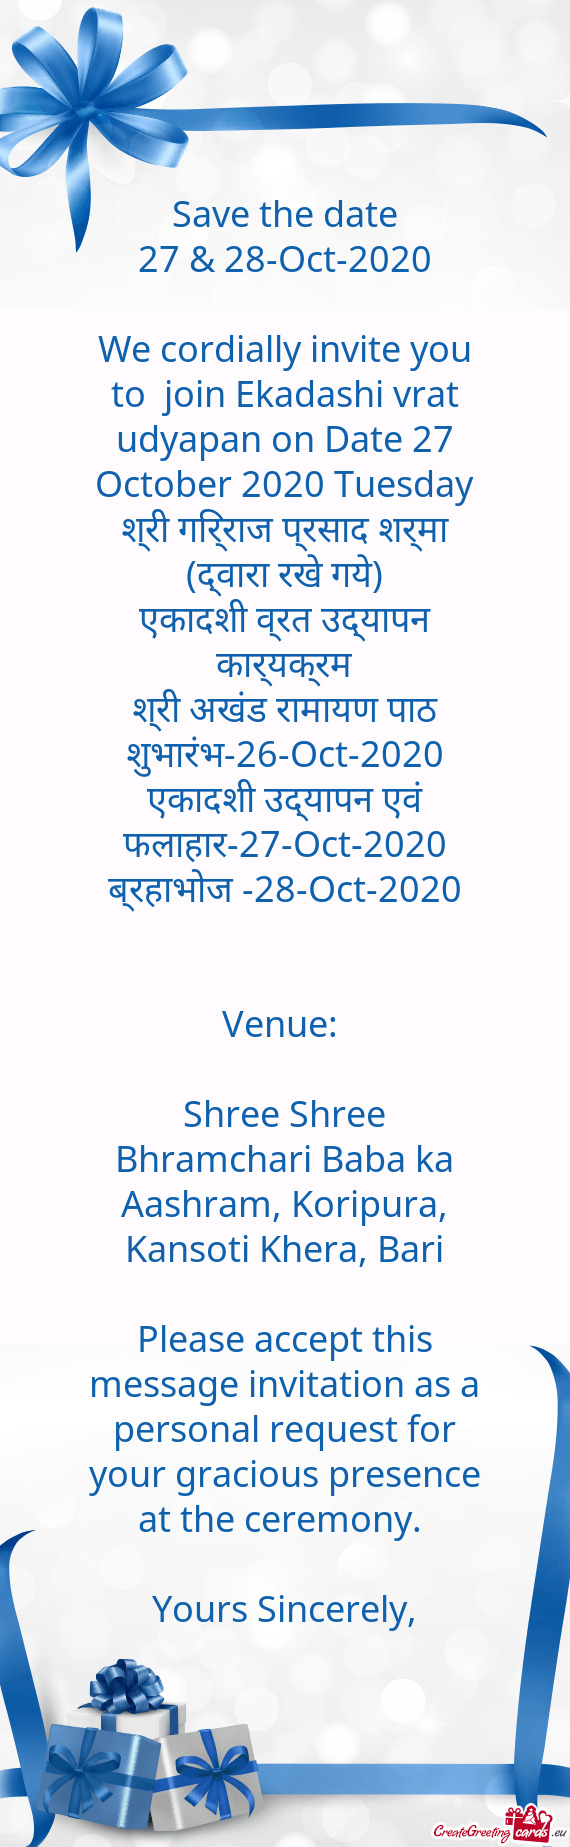 We cordially invite you to join Ekadashi vrat udyapan on Date 27 October 2020 Tuesday